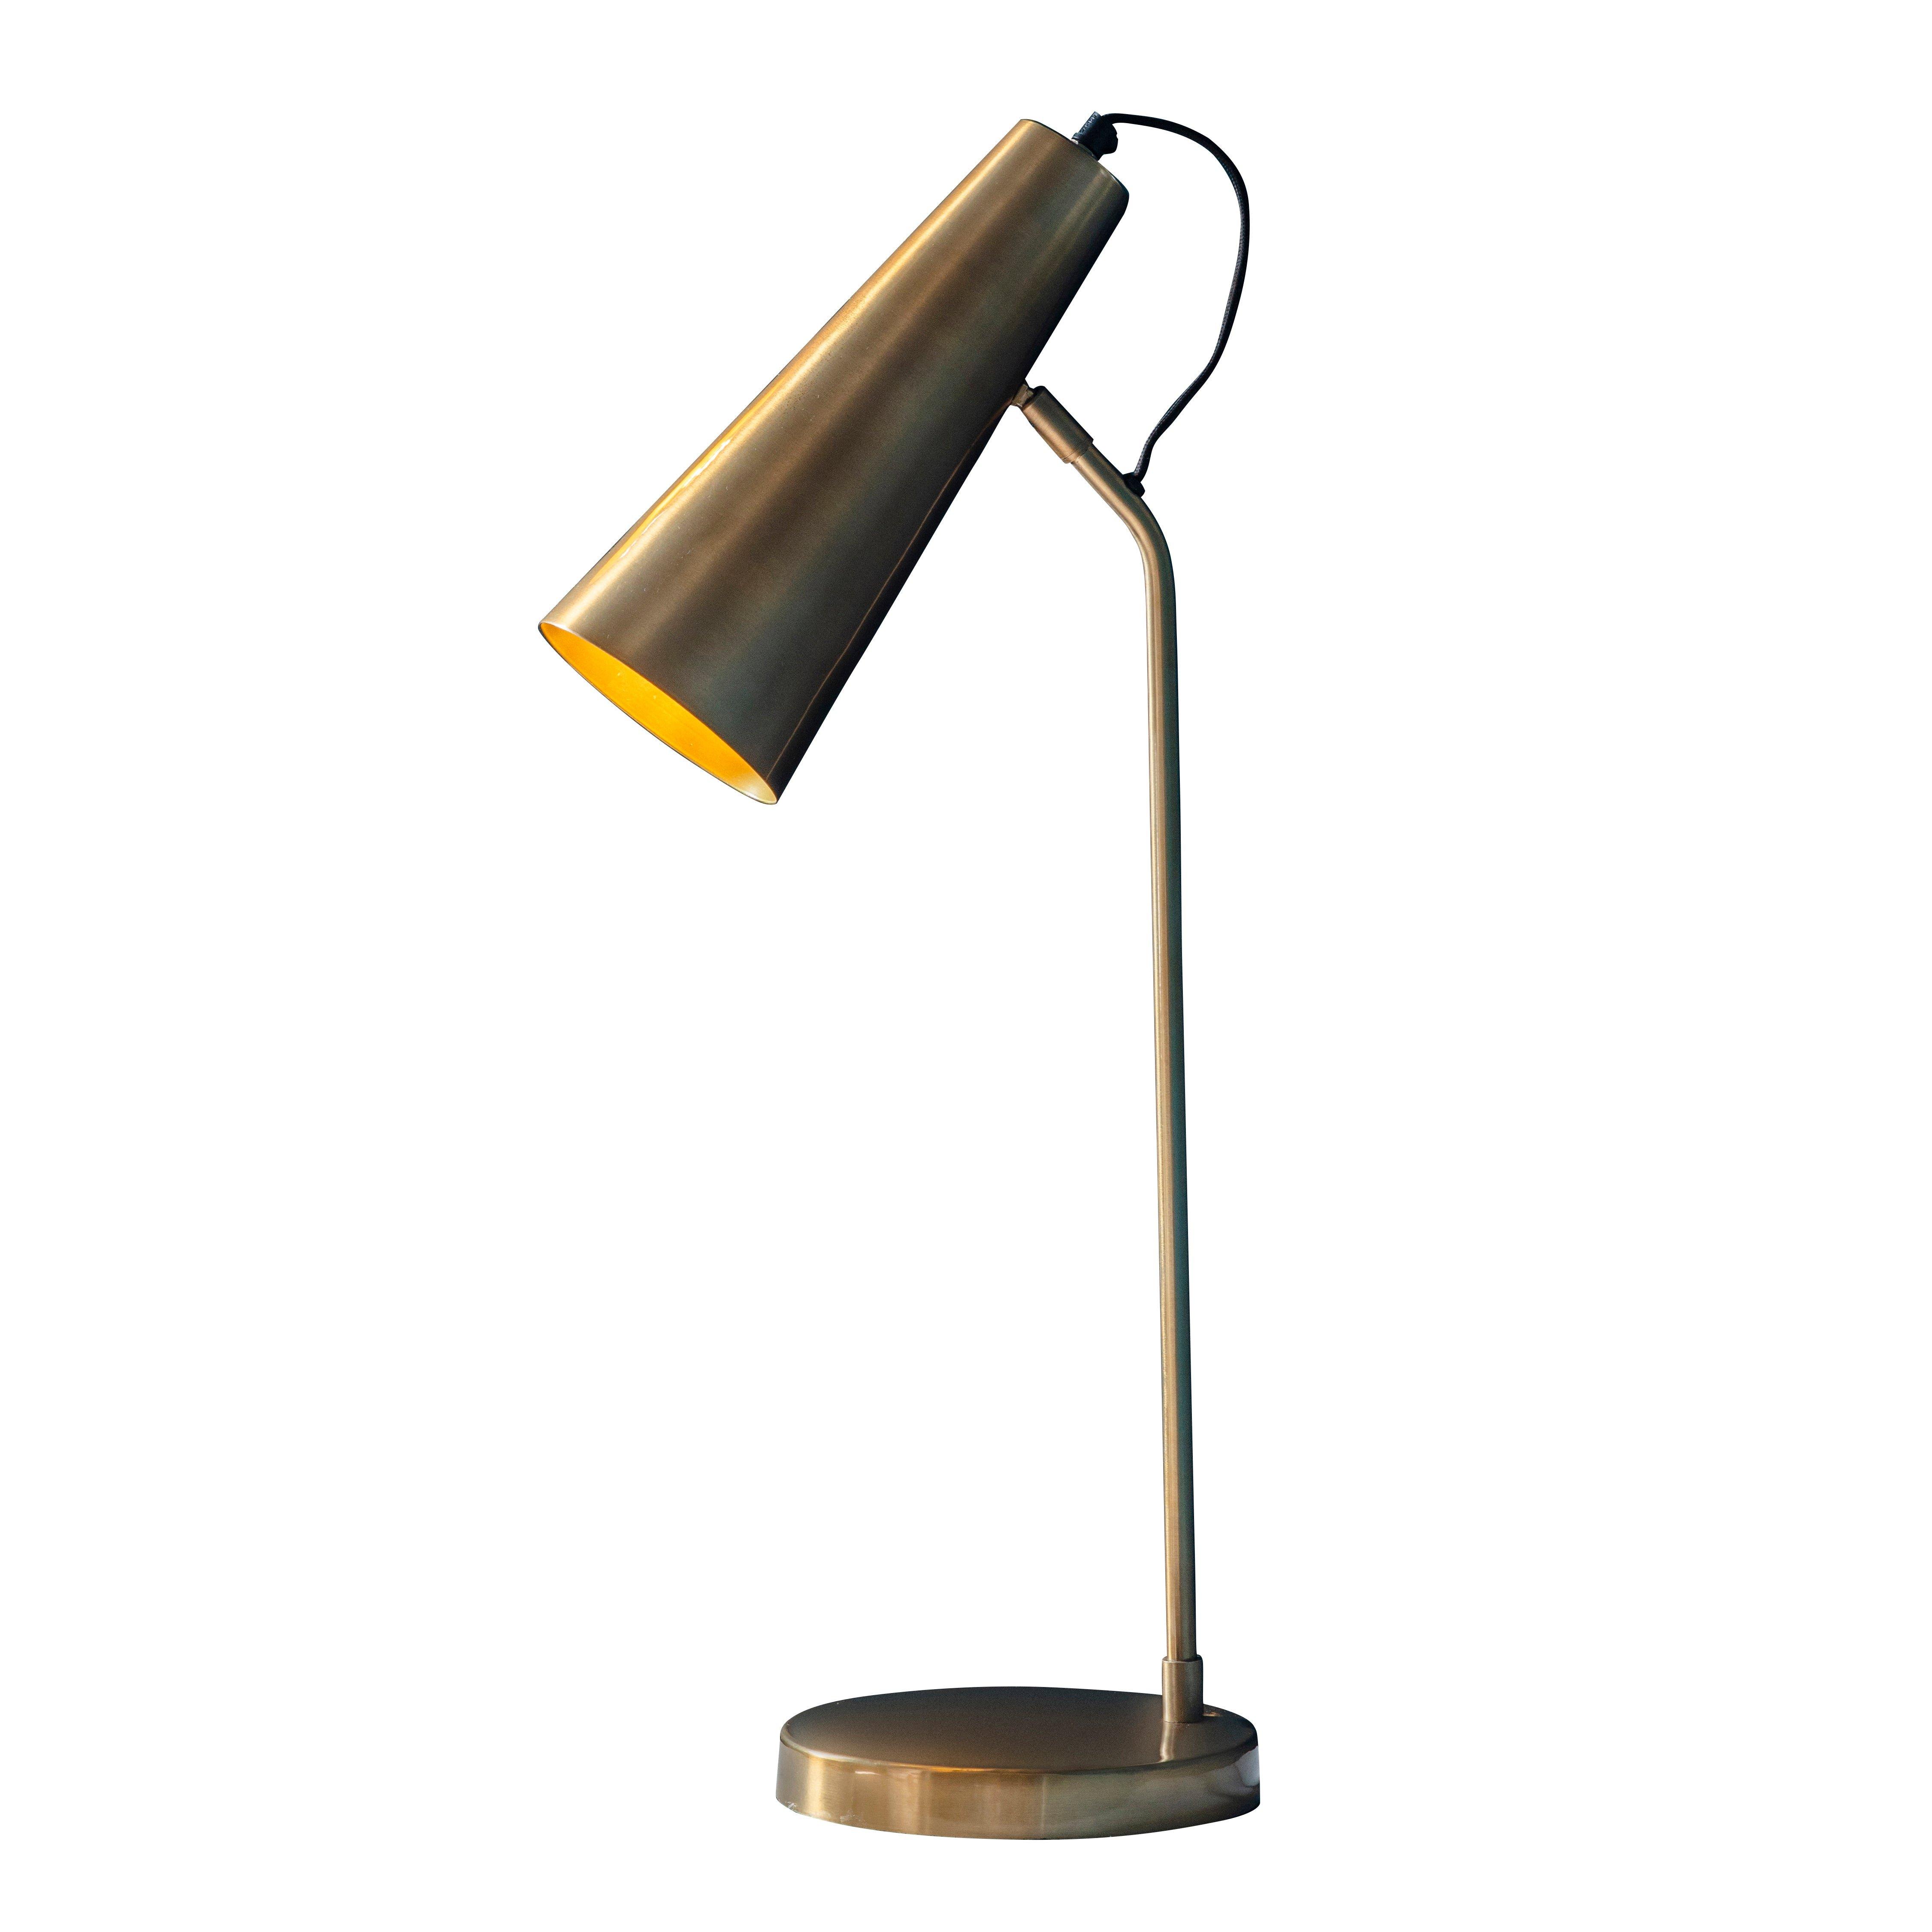 Table Lamp Antique Brass & Gold Effect Paint 10W LED E27 Bedside Light